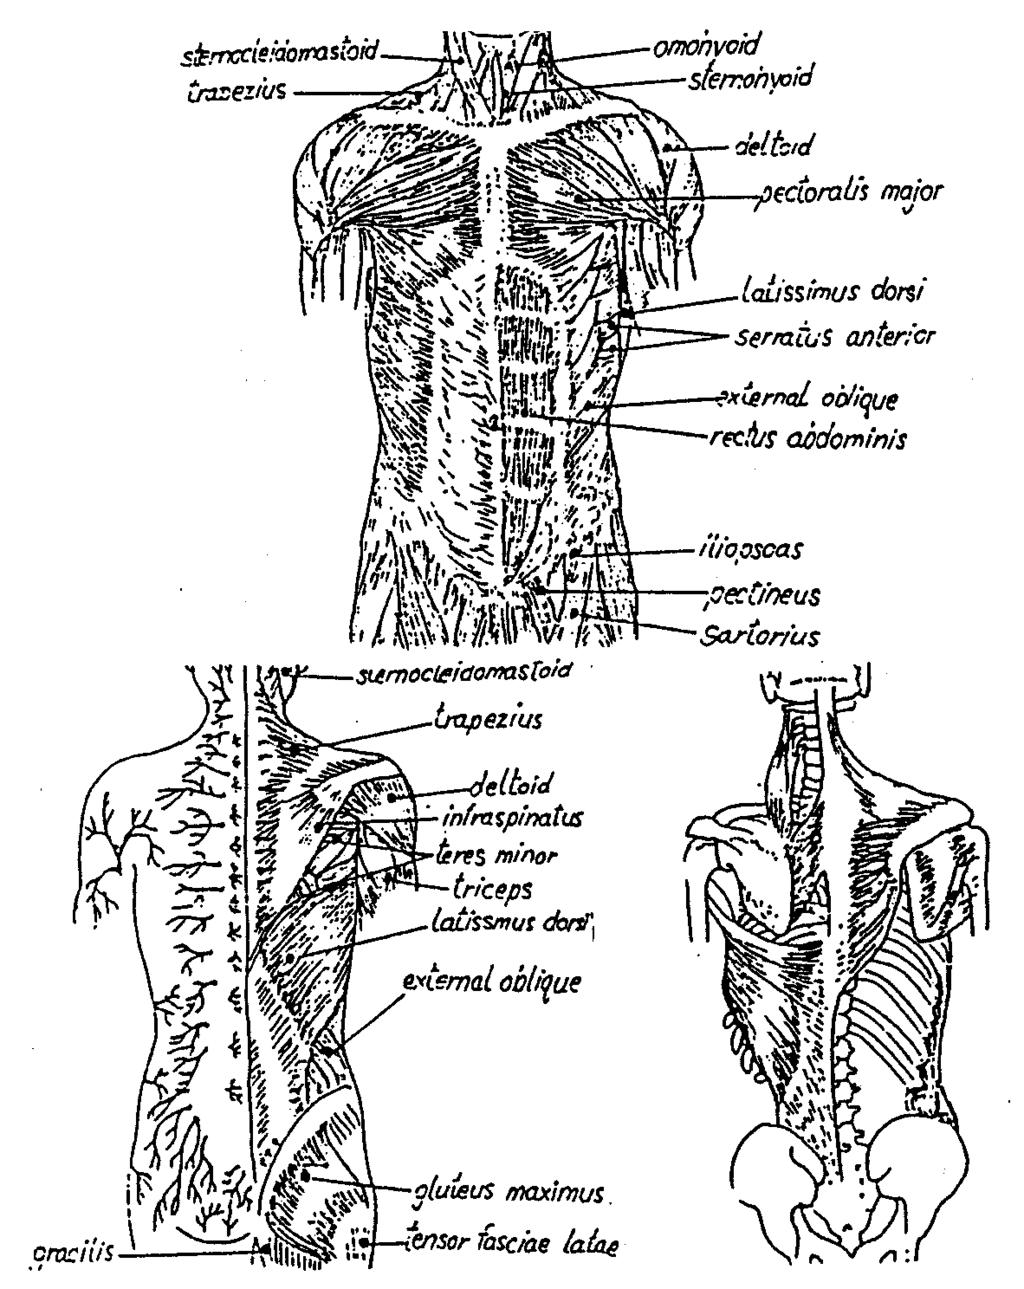 Ÿª Ë 8.20 ß ÿ Õ µõ å Õß π ÈÕ µ «( ª ß : Chusid JG. Correlative neuroanatomy and functional neurology, 17th edition. Singapore; Huntsmenn, 1979: 193.).